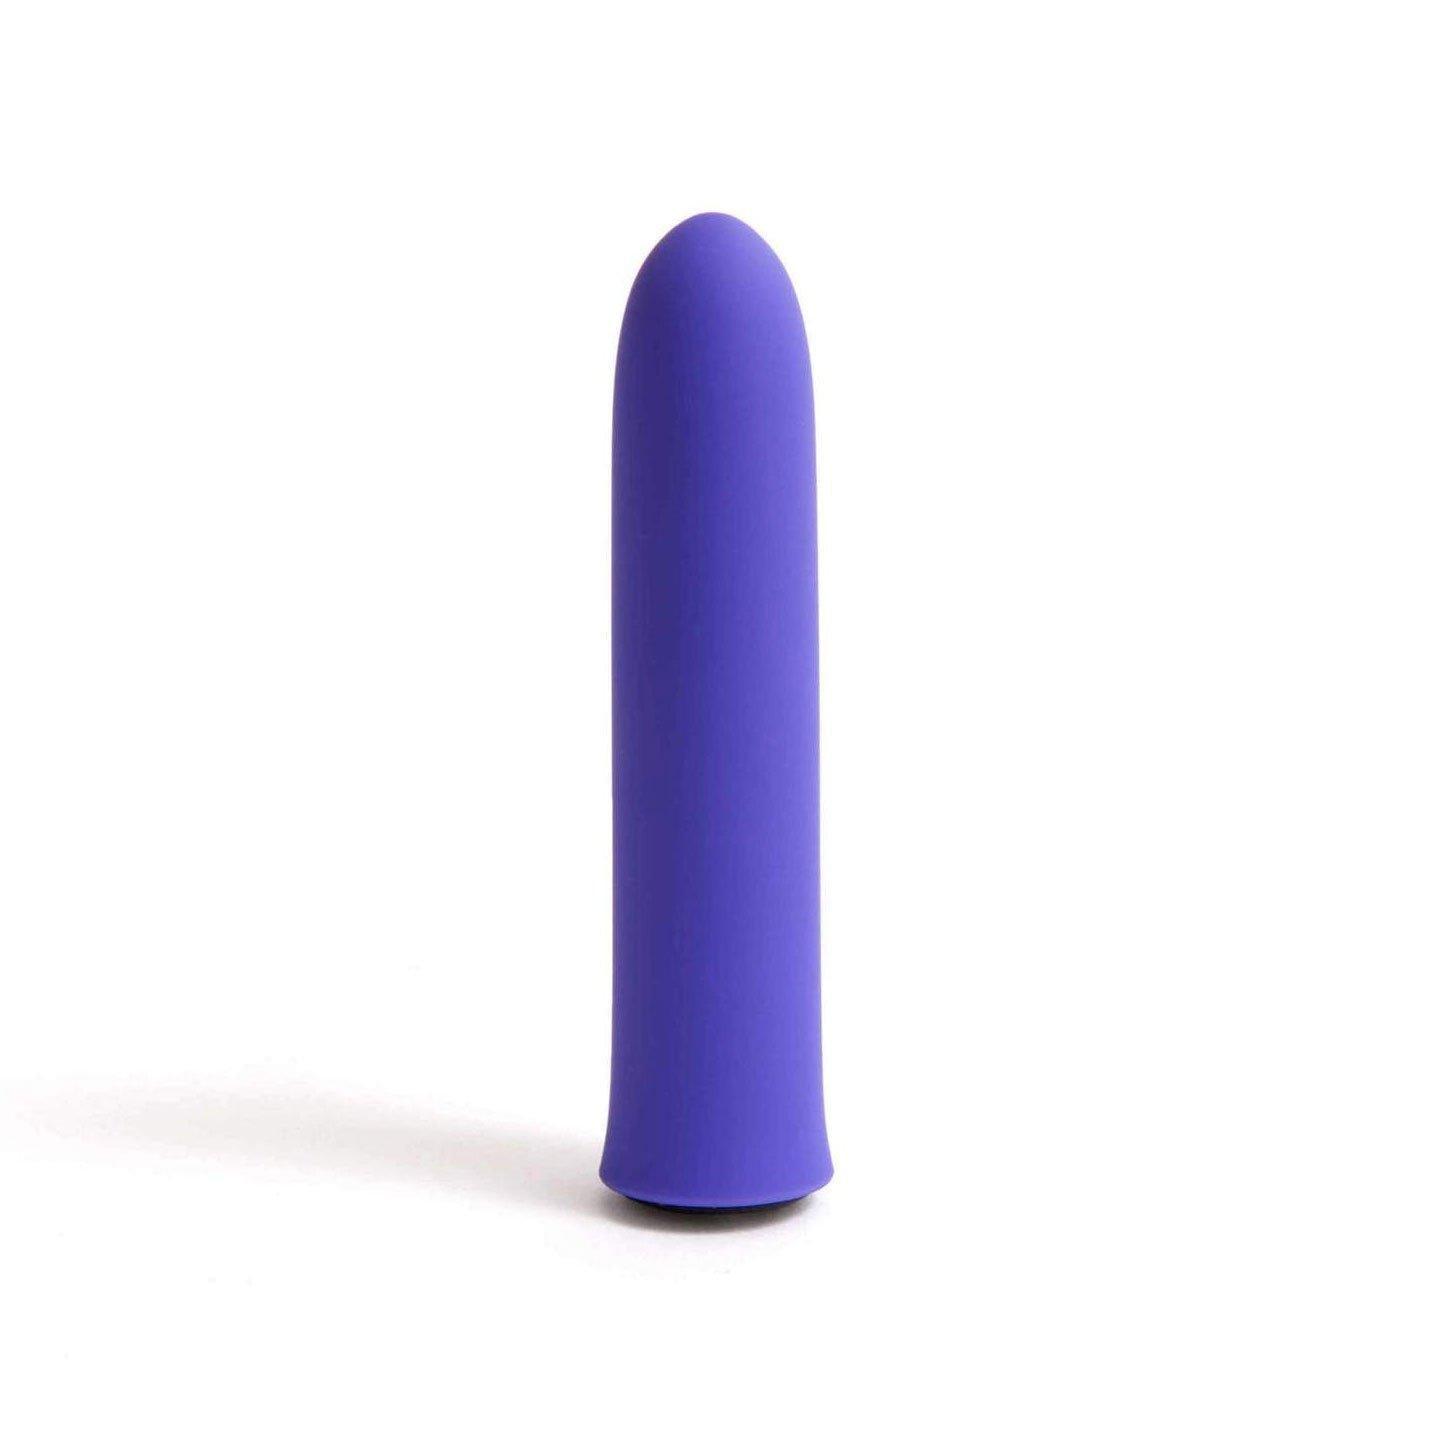 Nubii 10 Function Bullet - Ultra Violet - My Sex Toy Hub